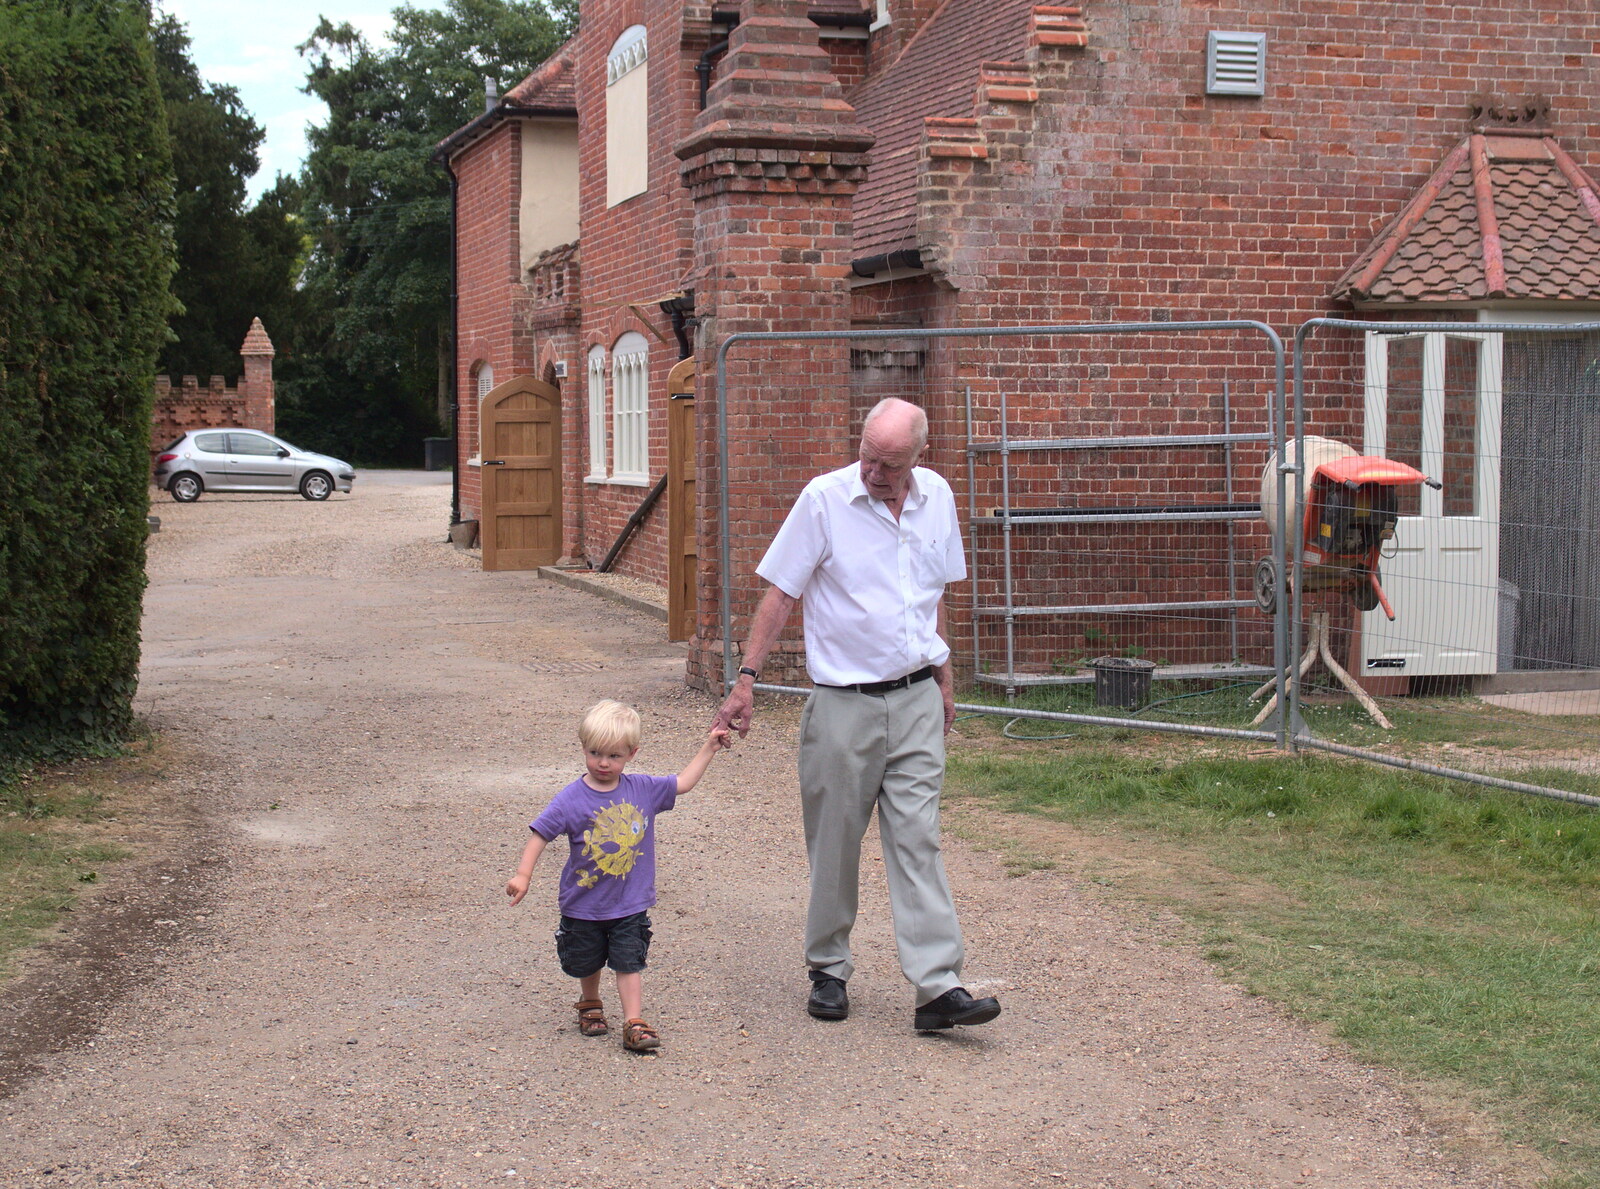 Gabes and Grandad roam around from SwiftKey Innovation Days, The Haymarket, London - 27th June 2014